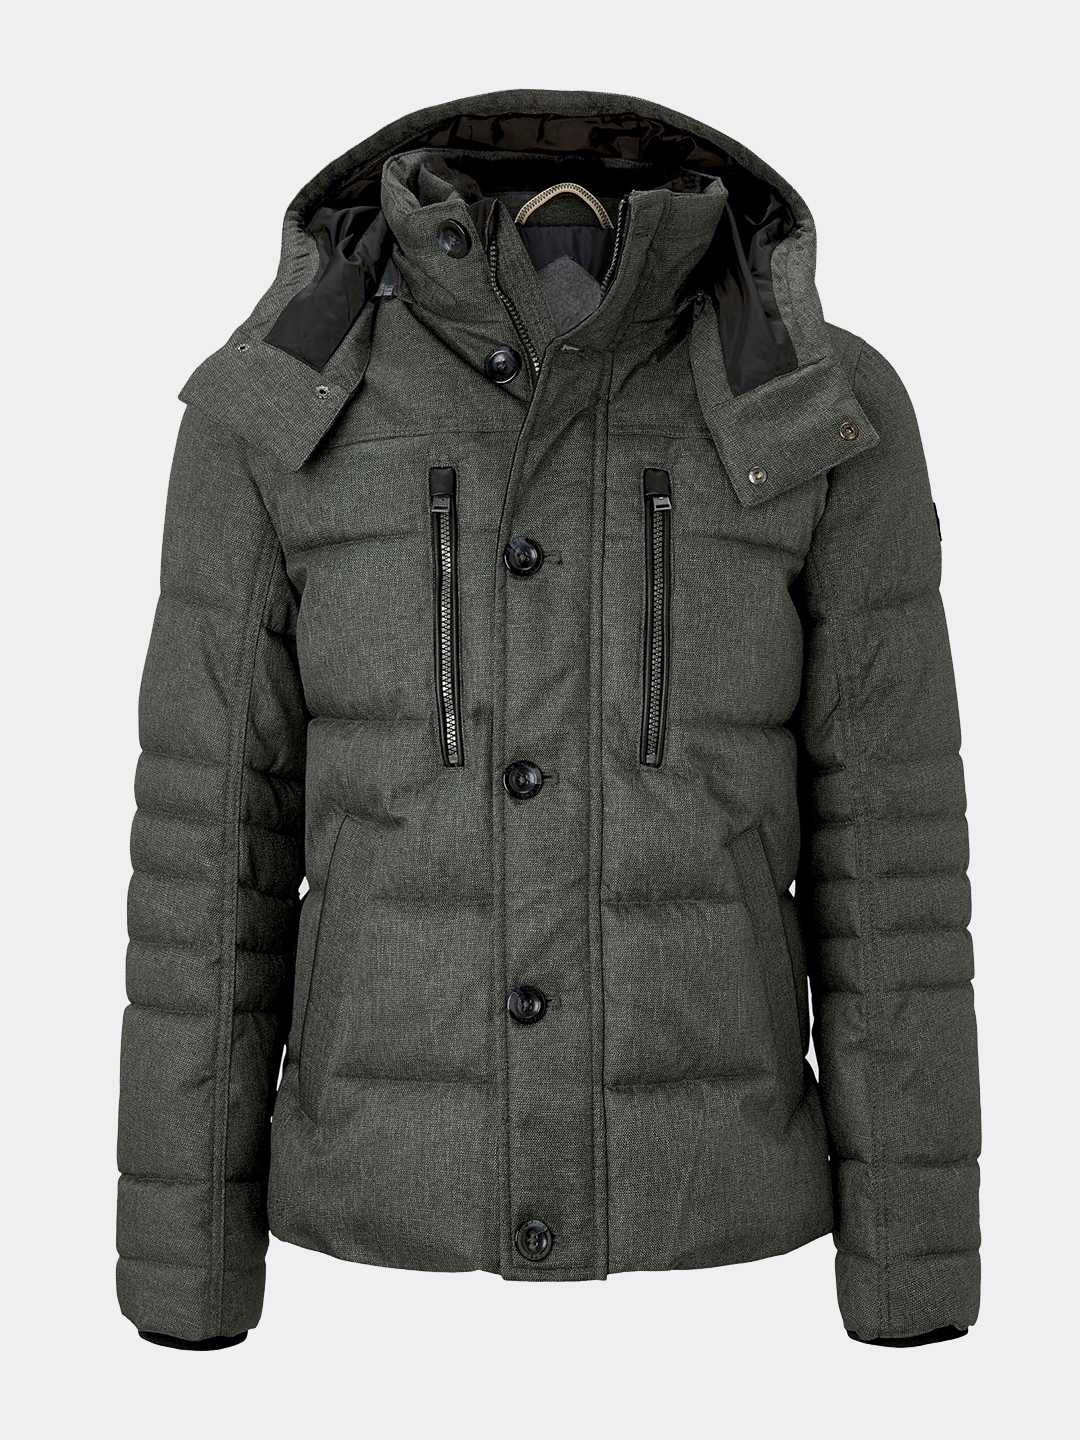 Мужская зимняя куртка Tom Tailor Германия [S/M/L/XL/2XL]